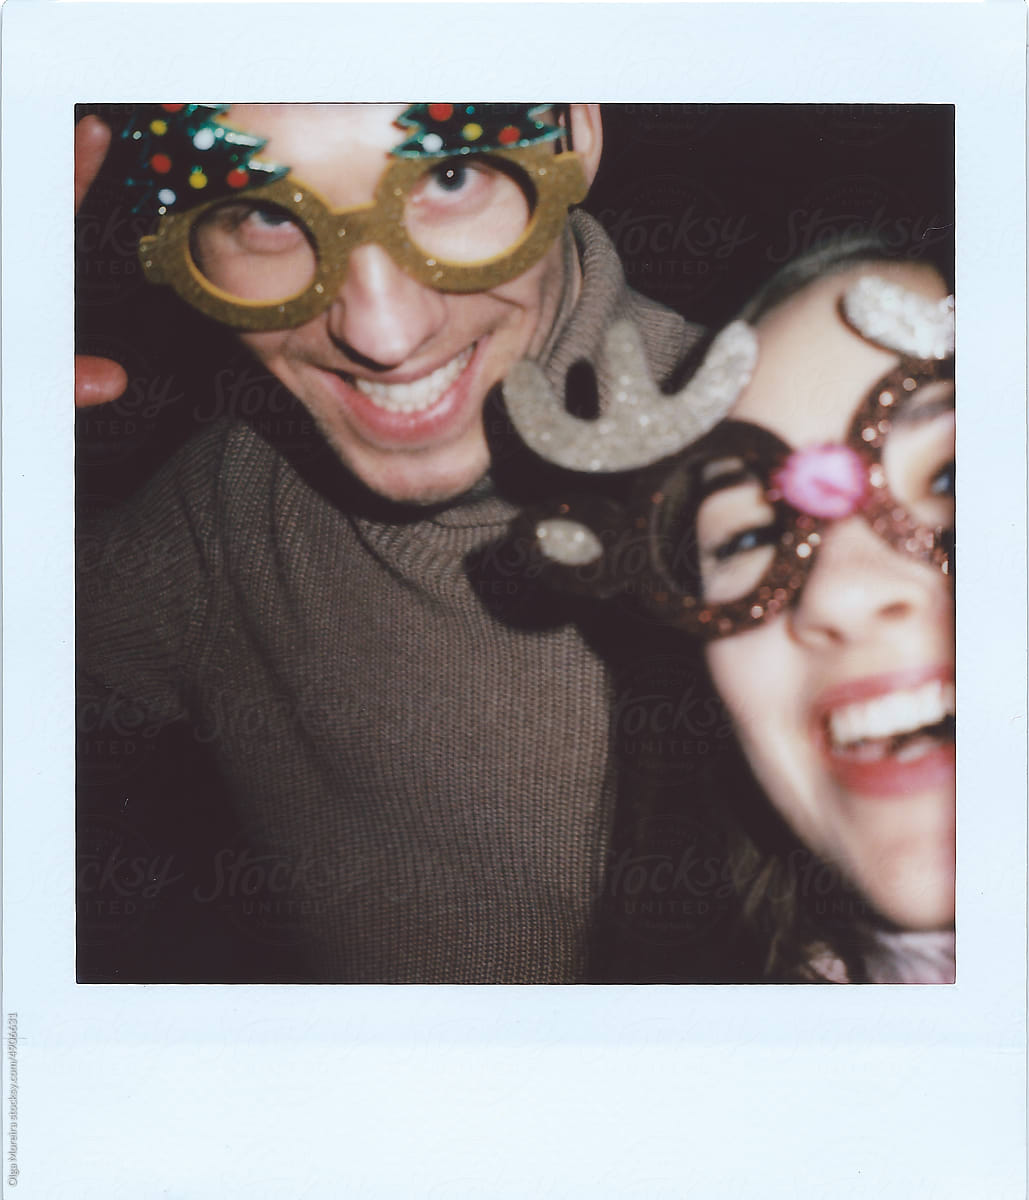 Christmas polaroid with a smiling couple